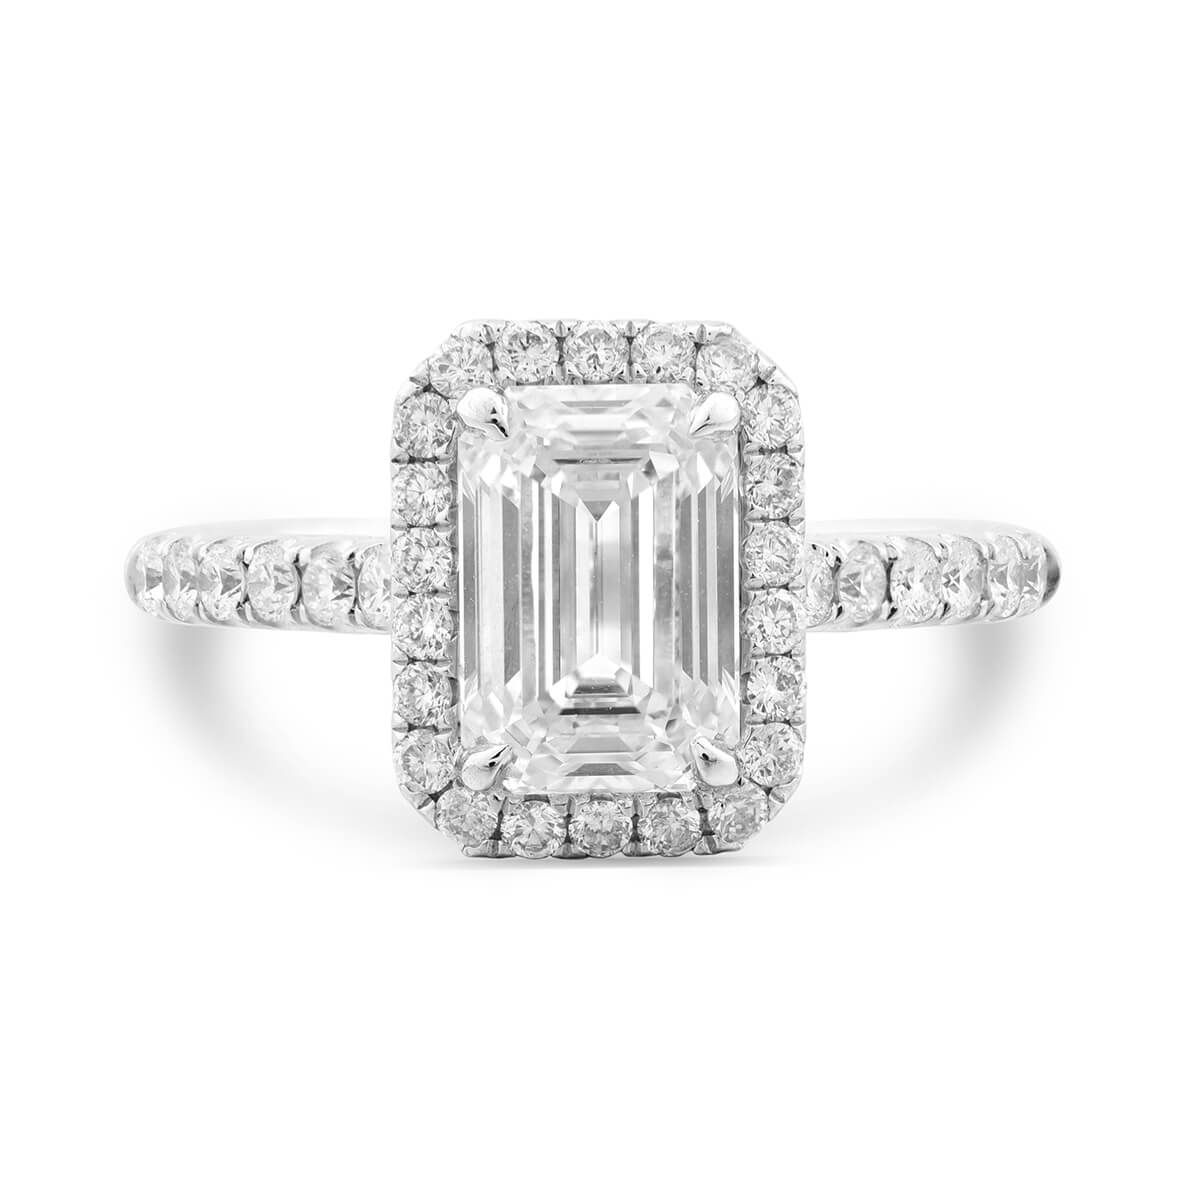  White Diamond Ring, 2.51 Ct. TW, Emerald shape, GIA Certified, 6282791419